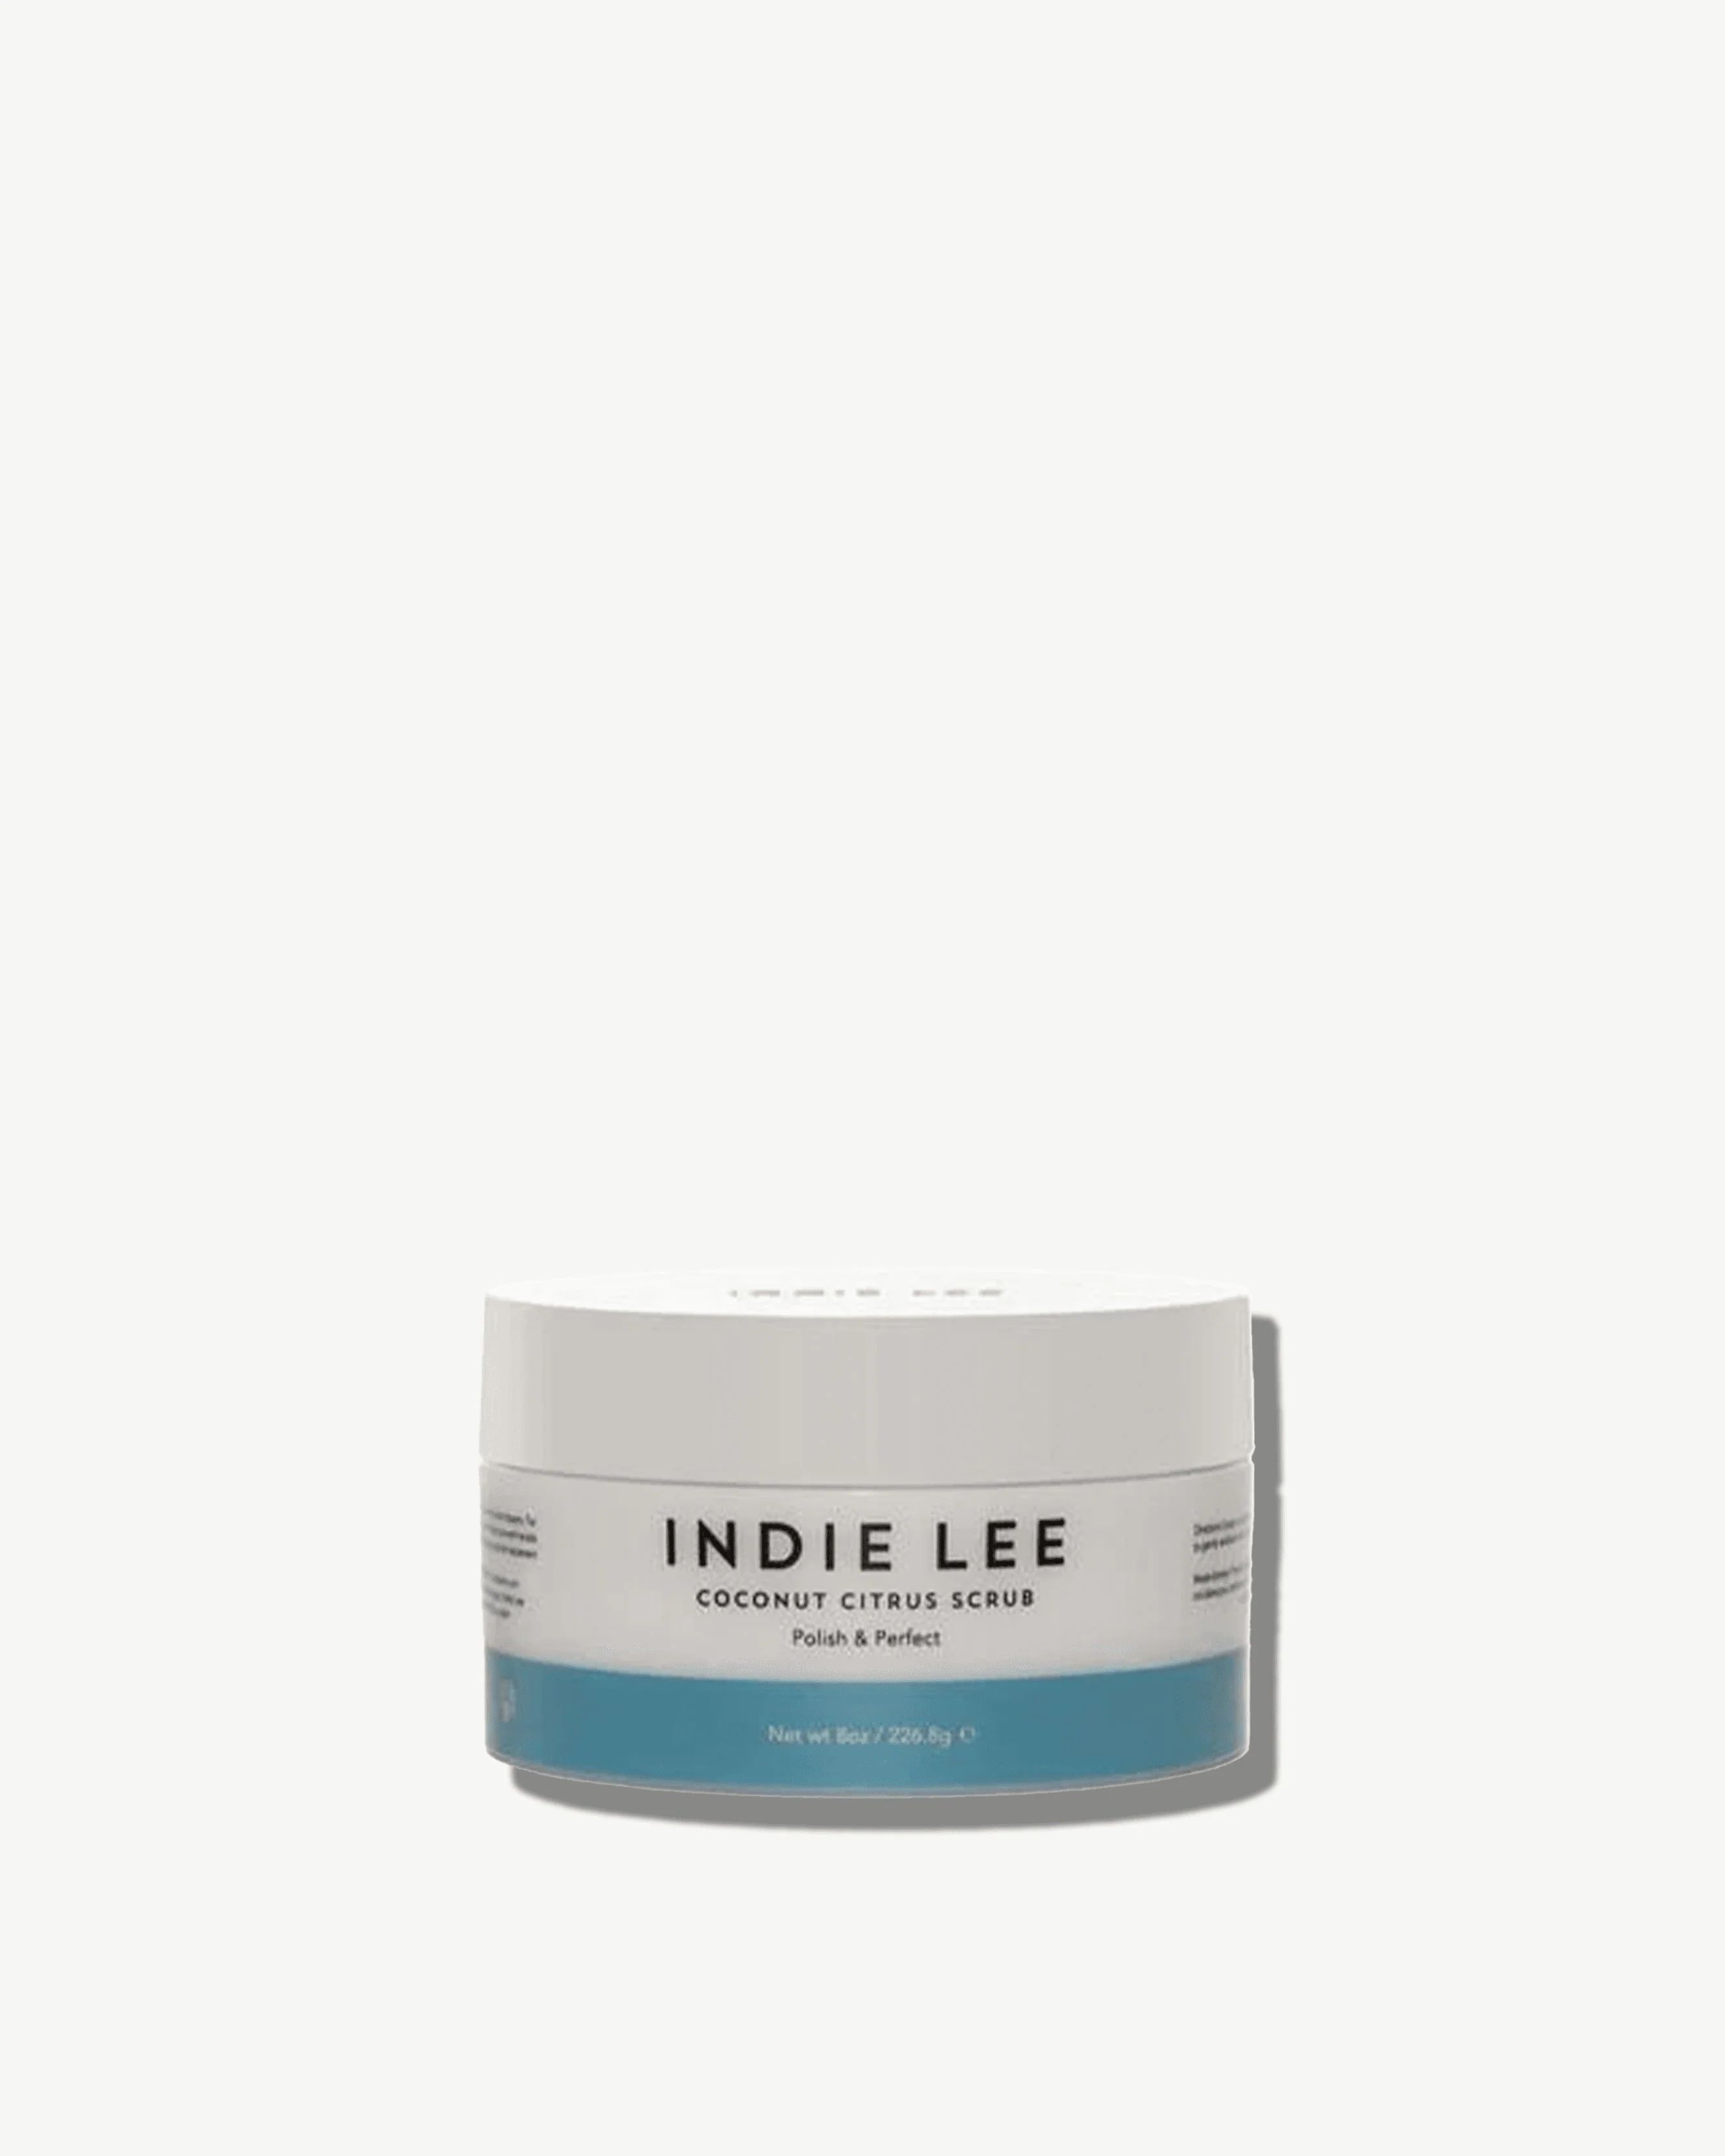 Indie Lee Coconut Citrus Scrub | Credo Beauty